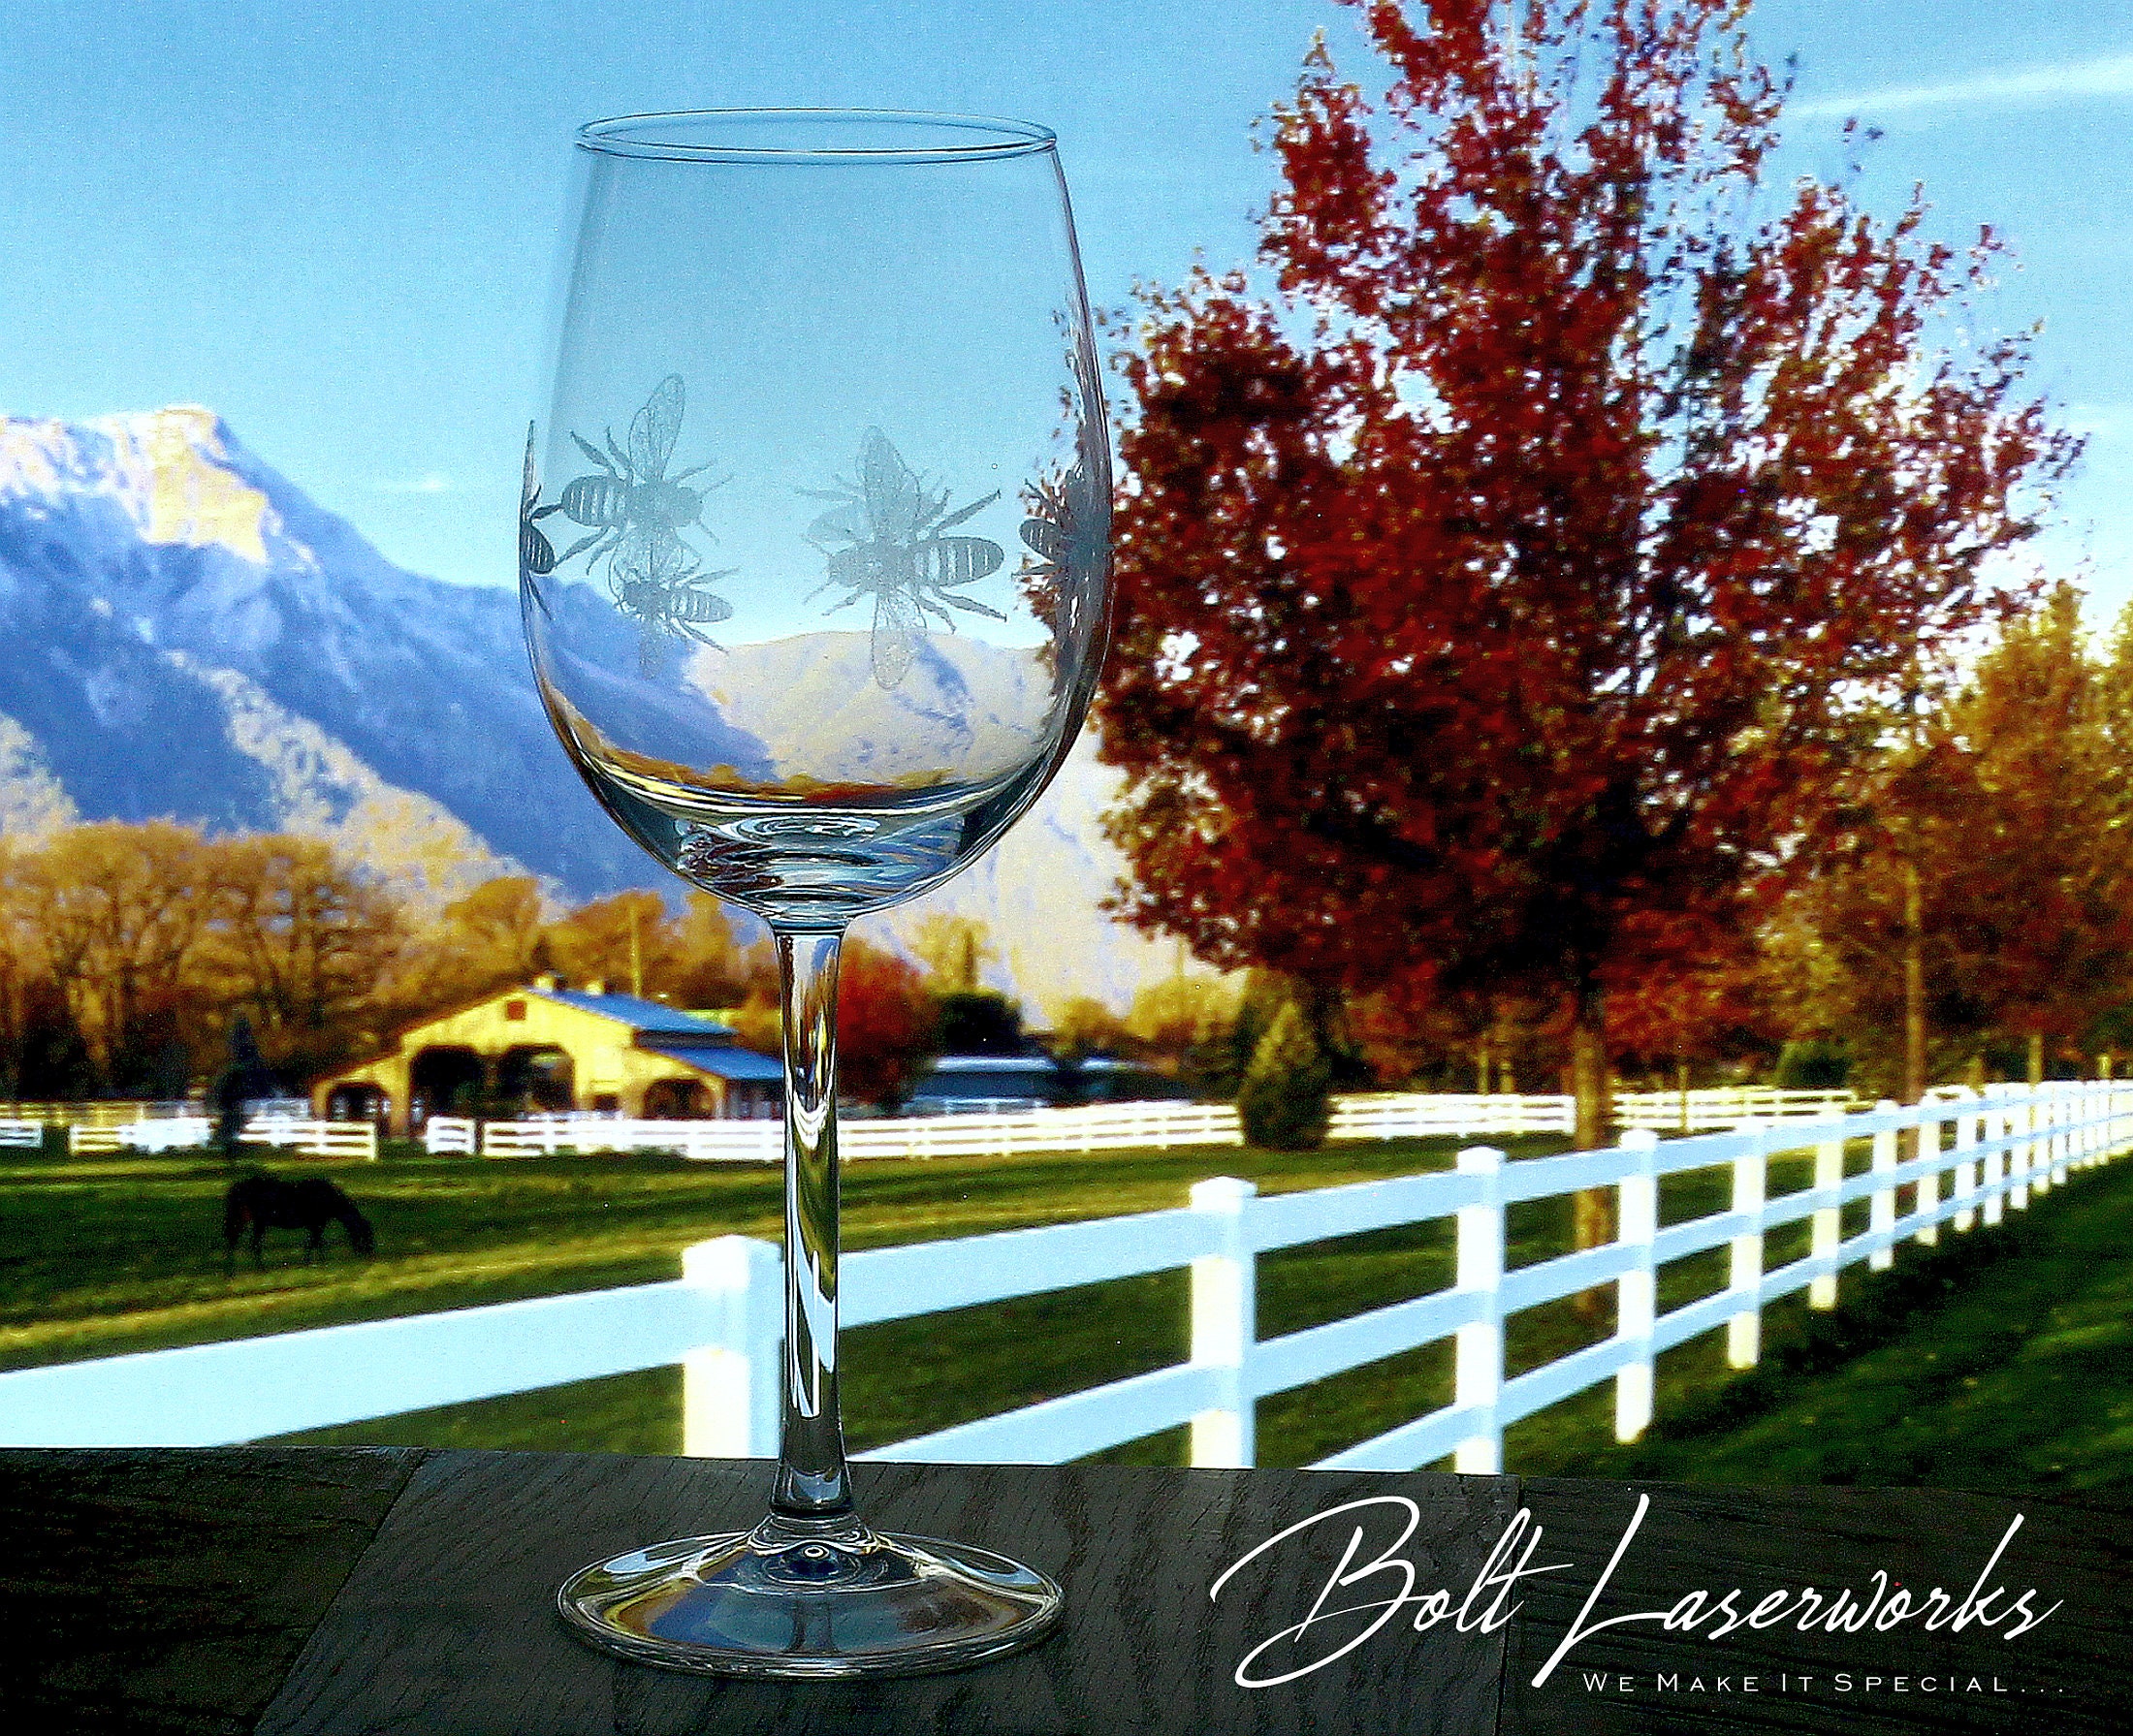 chakra drinking glass set Nature design -- 7x250 ml